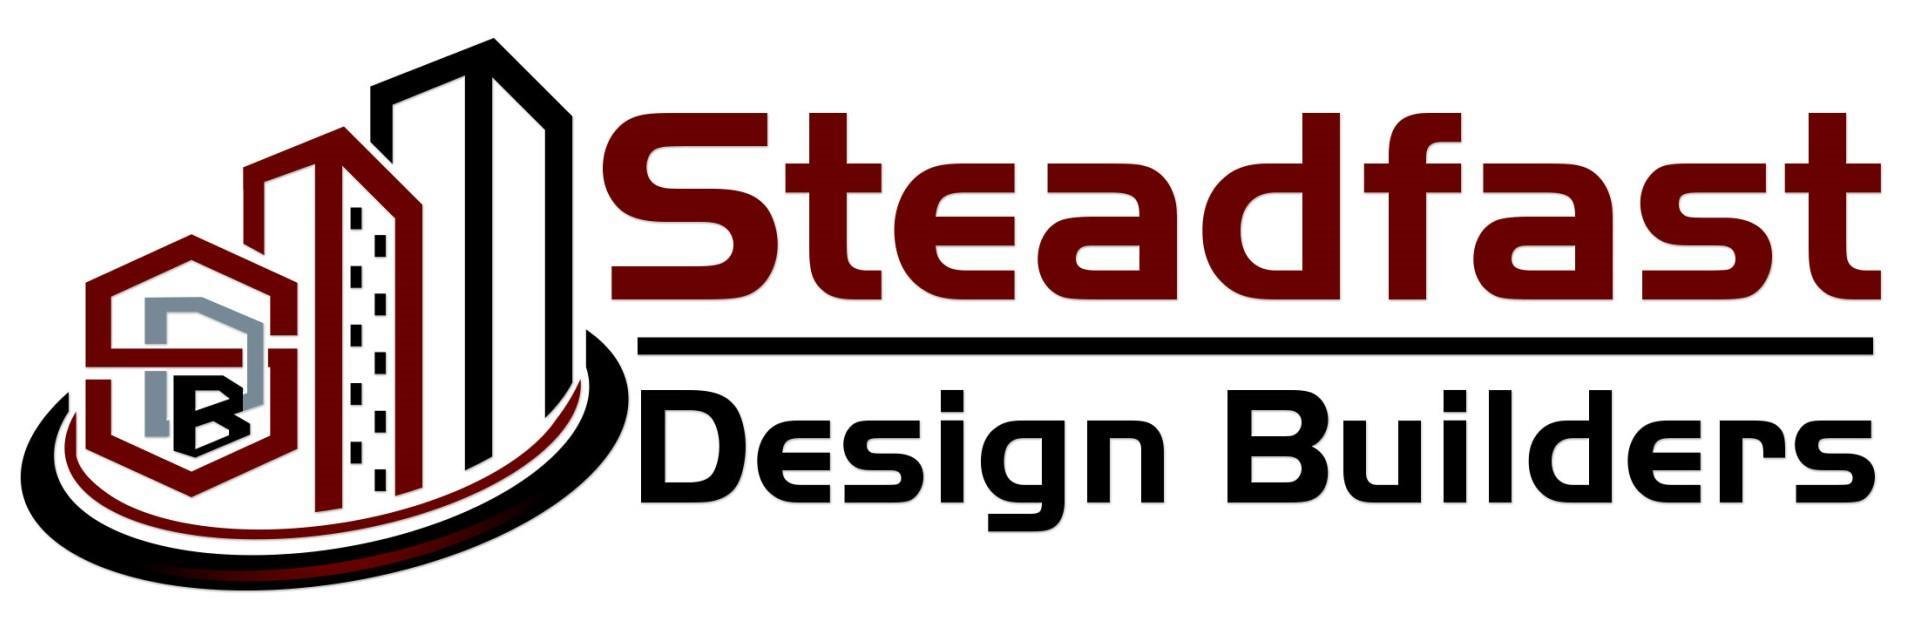 Steadfast Design Builders, Inc. Logo